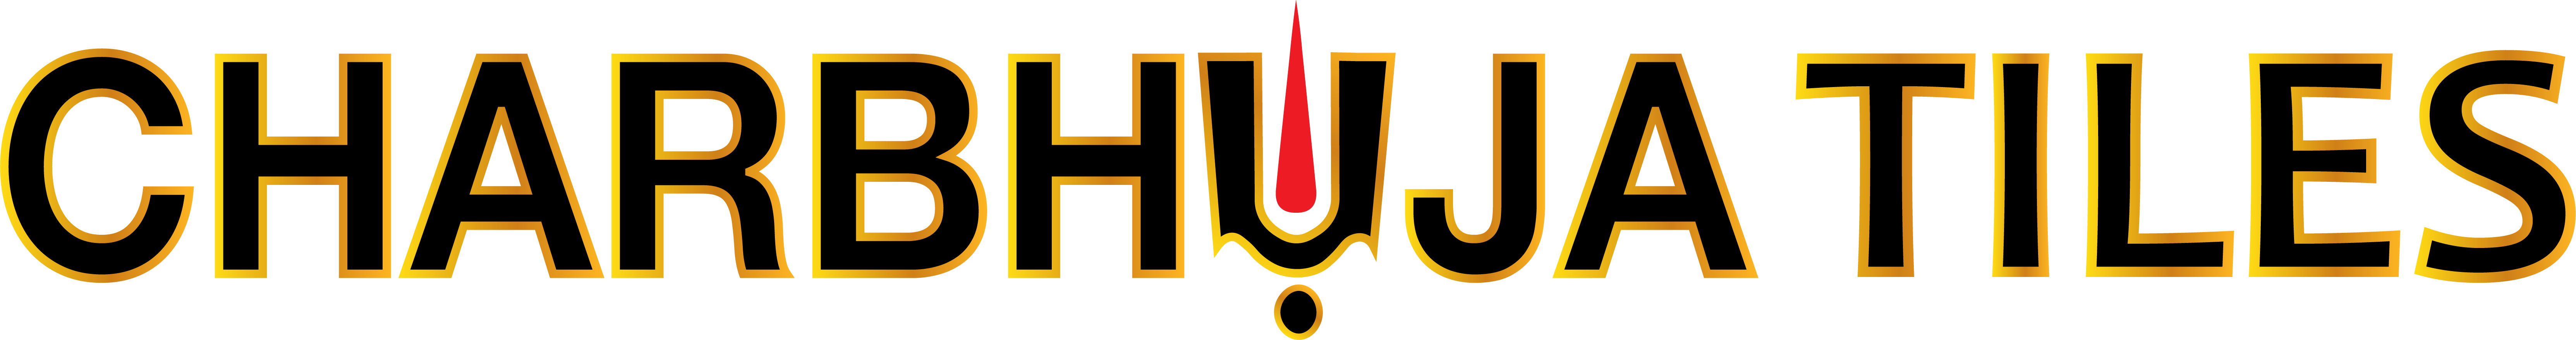 charbhuja tiles logo